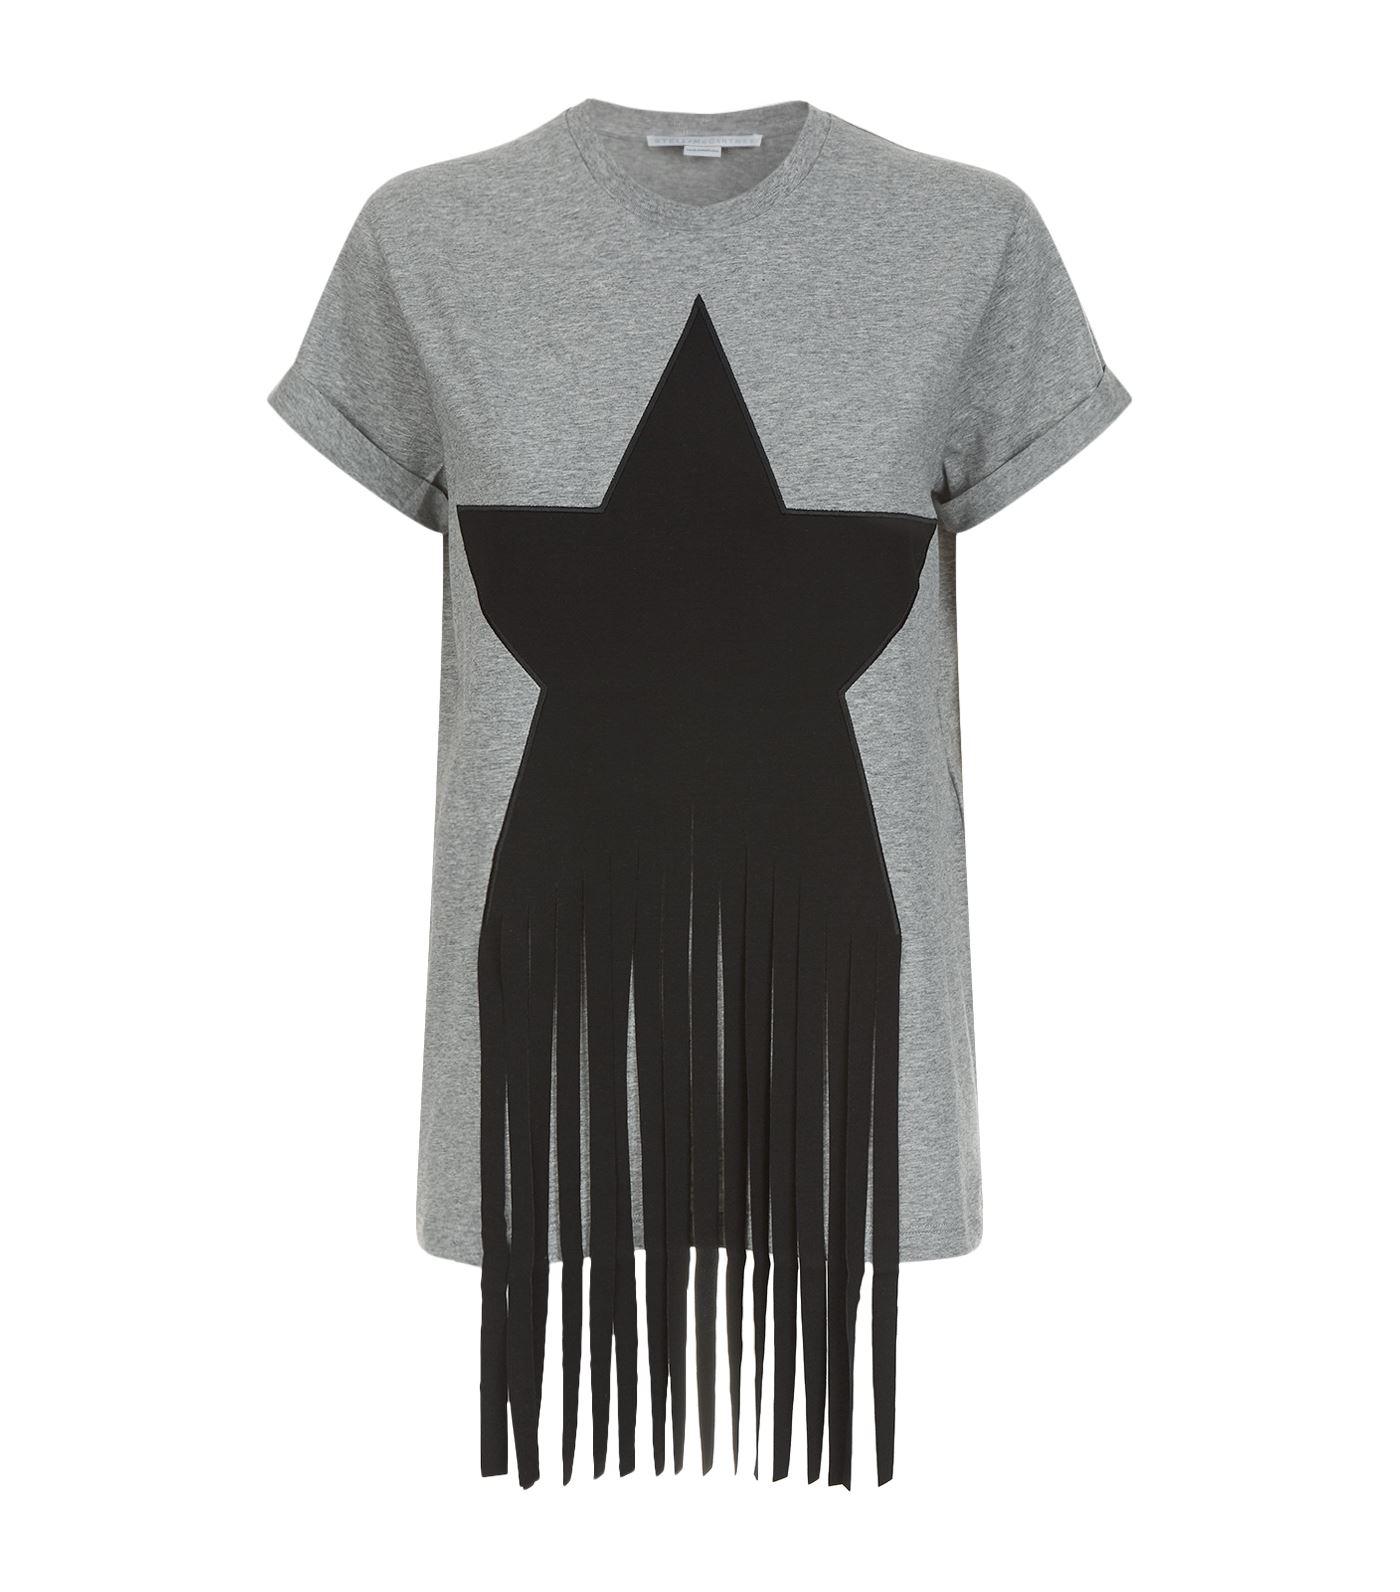 Stella McCartney Cotton Fringe Star T-shirt in Grey (Gray) - Lyst